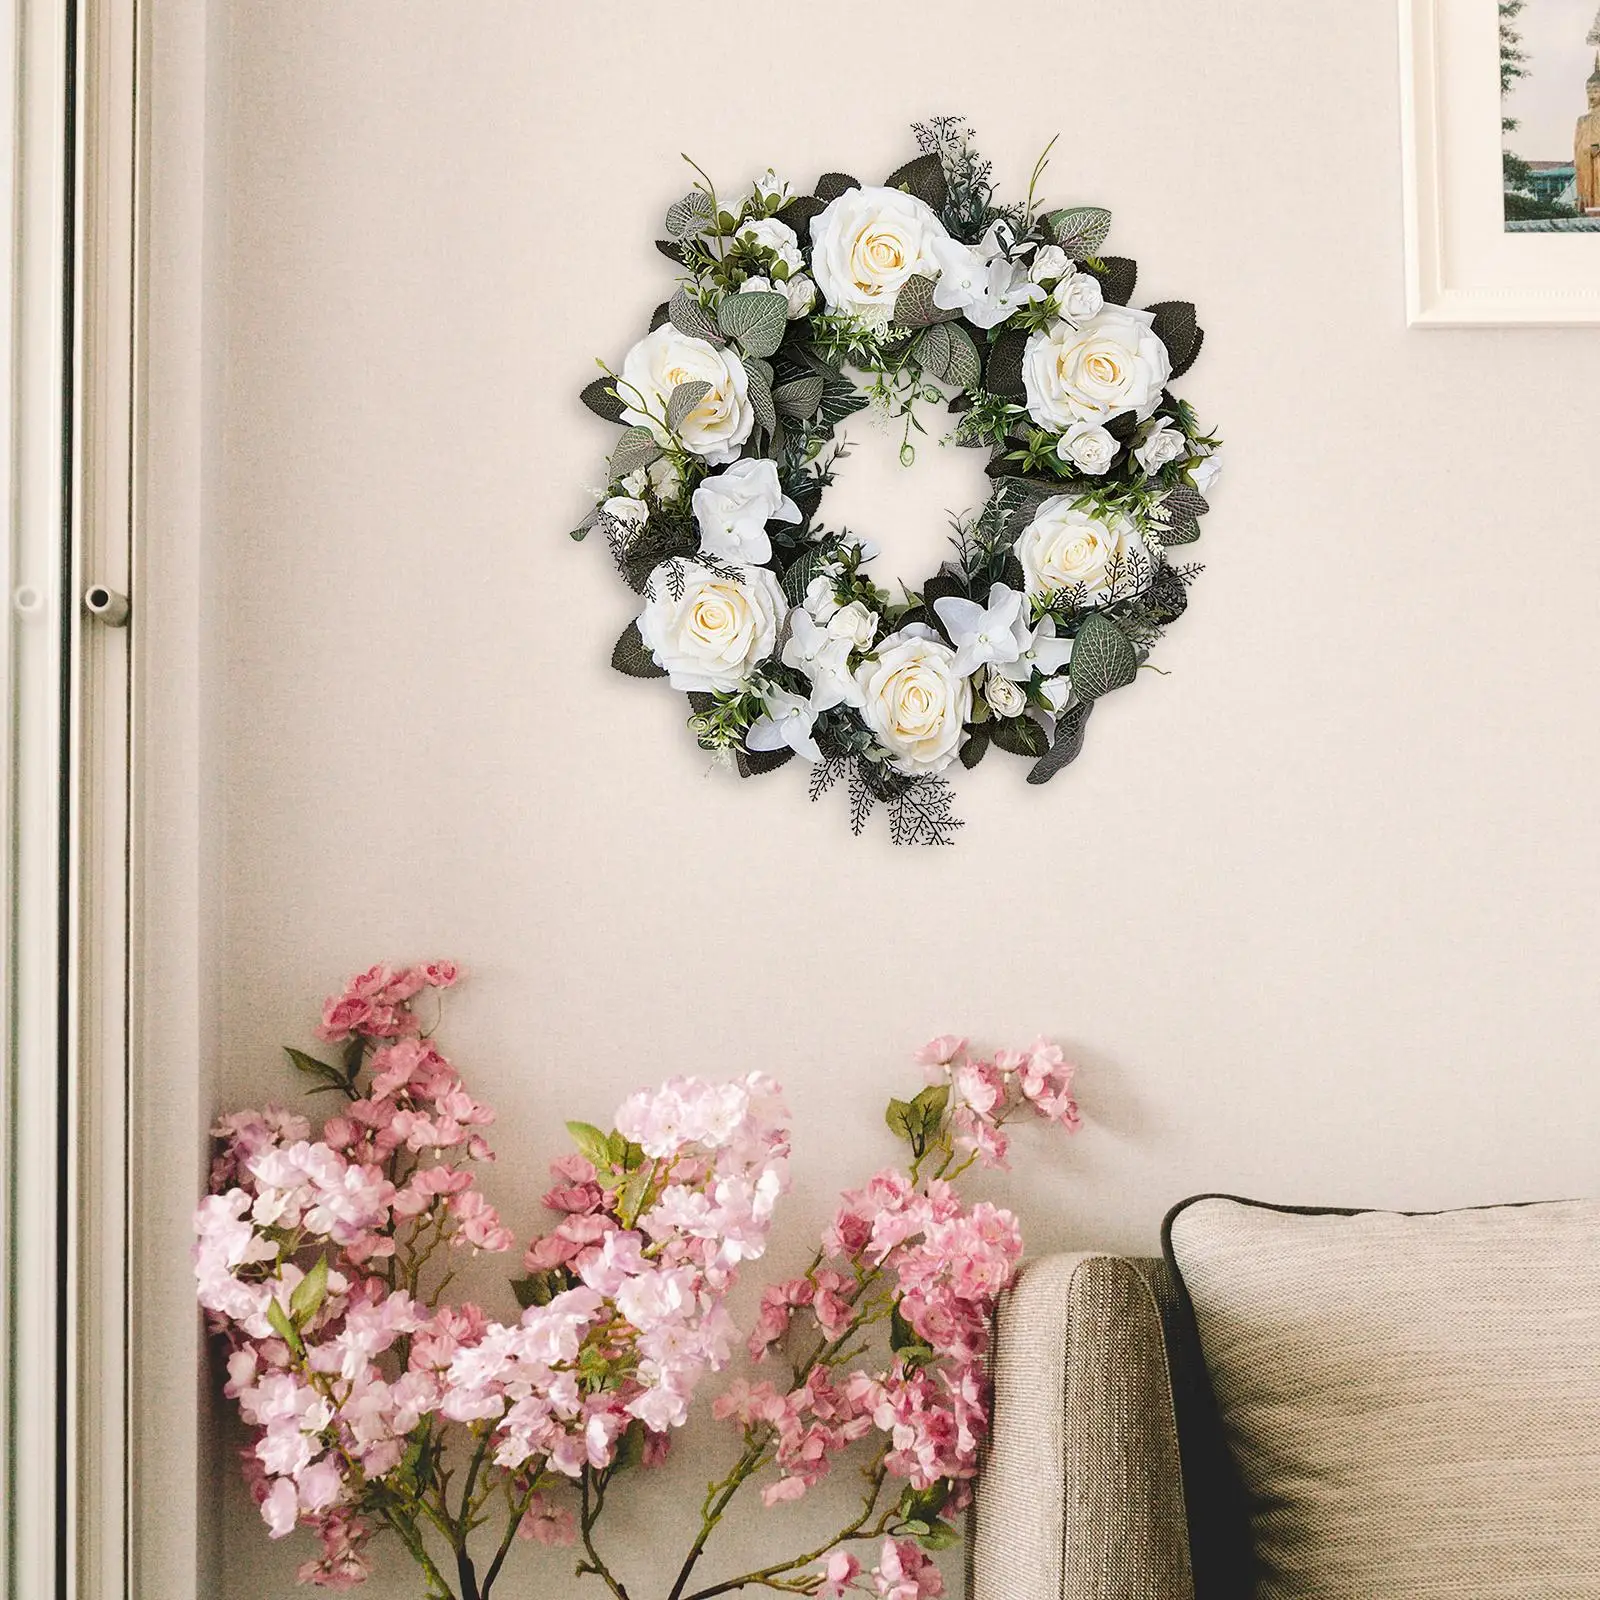 45cm Artificial Wreath Floral Swag Garland Hanging Wreath Arrangements Flower Wreath for Wedding Wall Decor Ornament